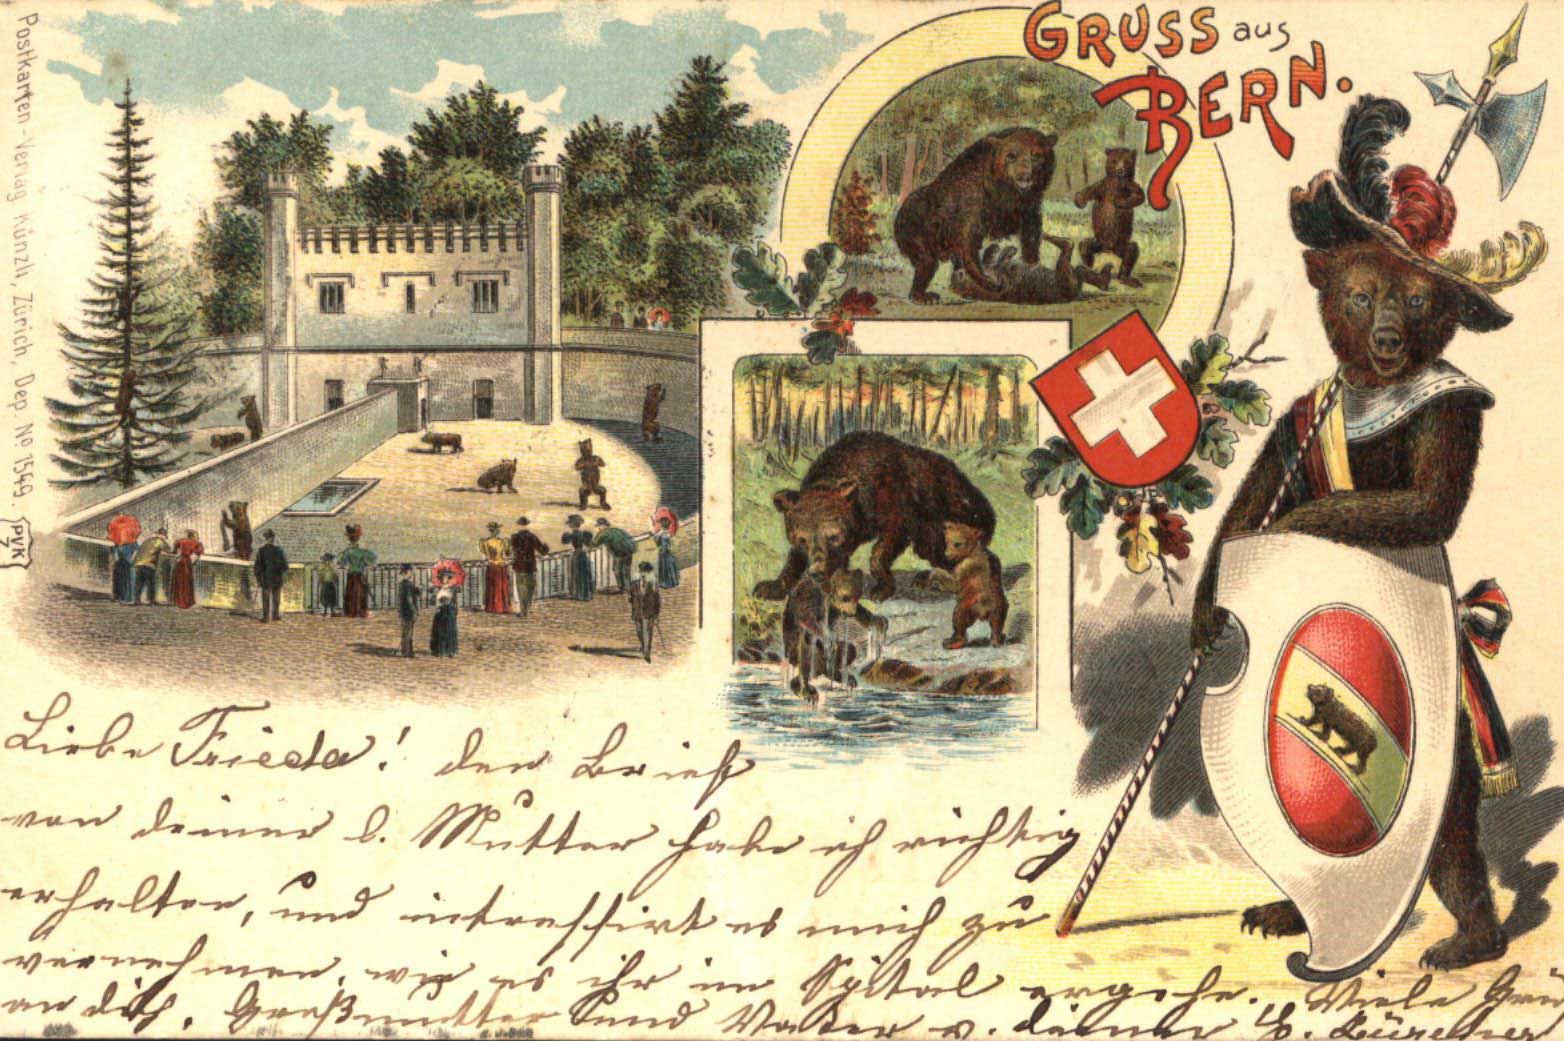 Cartolina fossa degli orsi © Bernisches Historisches Museum